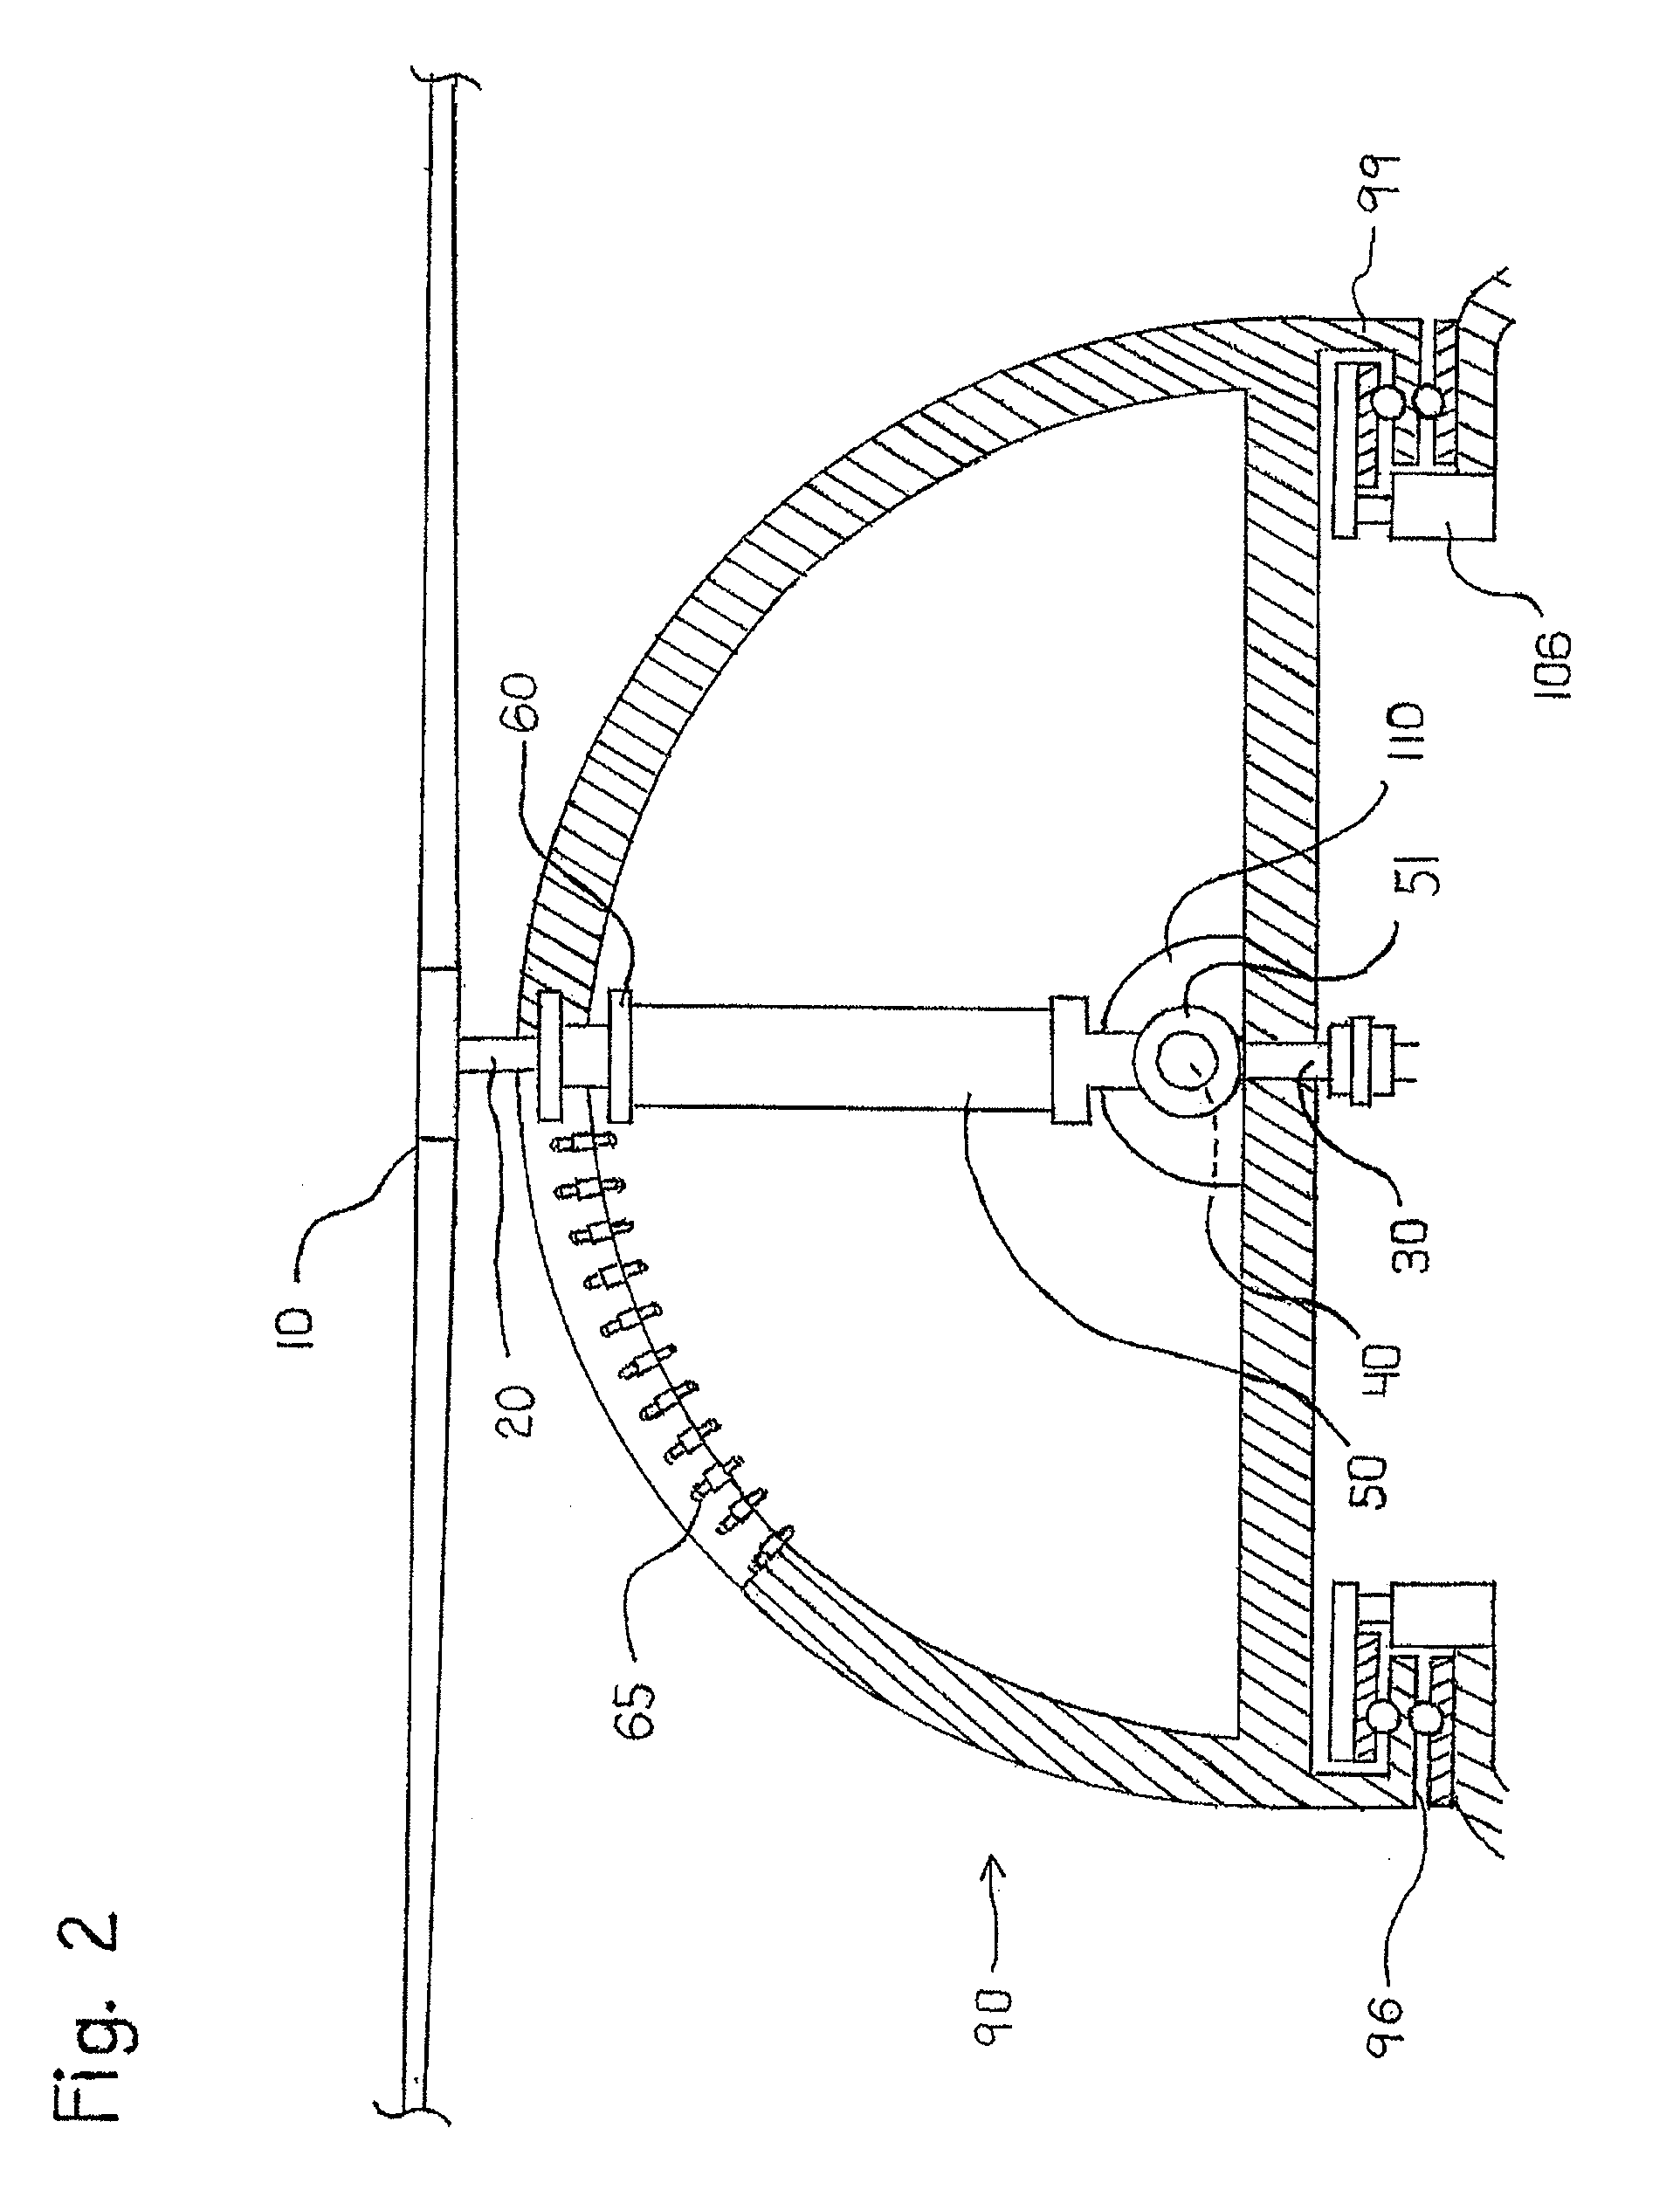 Direct orientation vector rotor